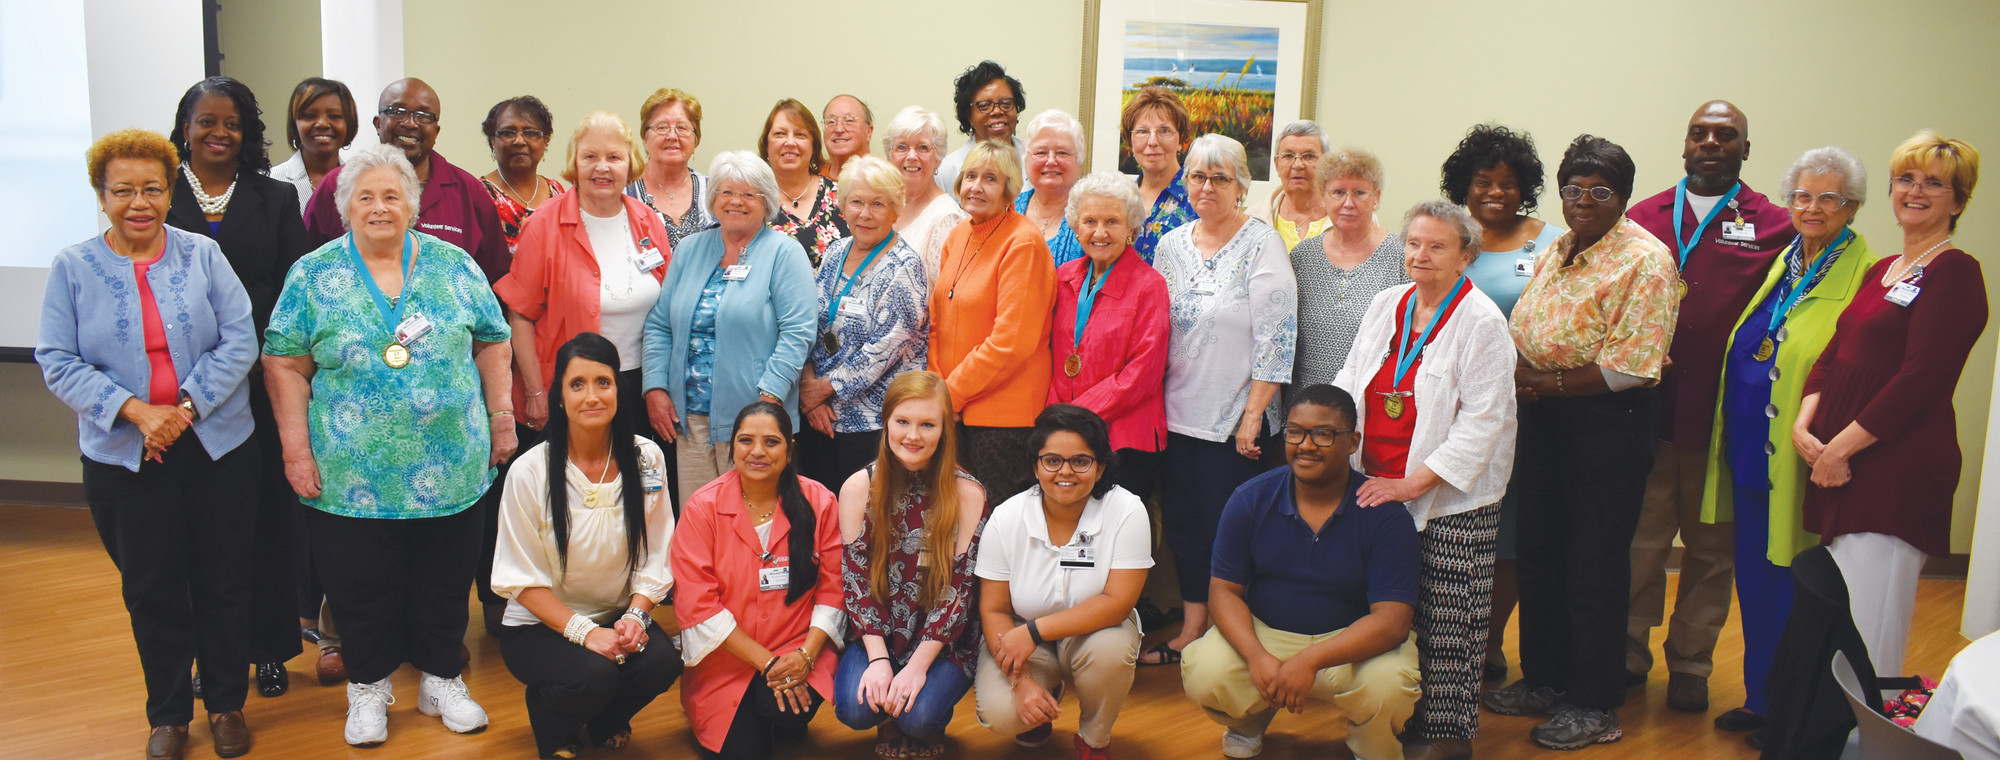 McLeod Health Clarendon recently held a luncheon at the hospital in honor of National Volunteer Week. Below, Hattie Benjamin and Lynda “Jane” Carroll were named Volunteers of the Year.